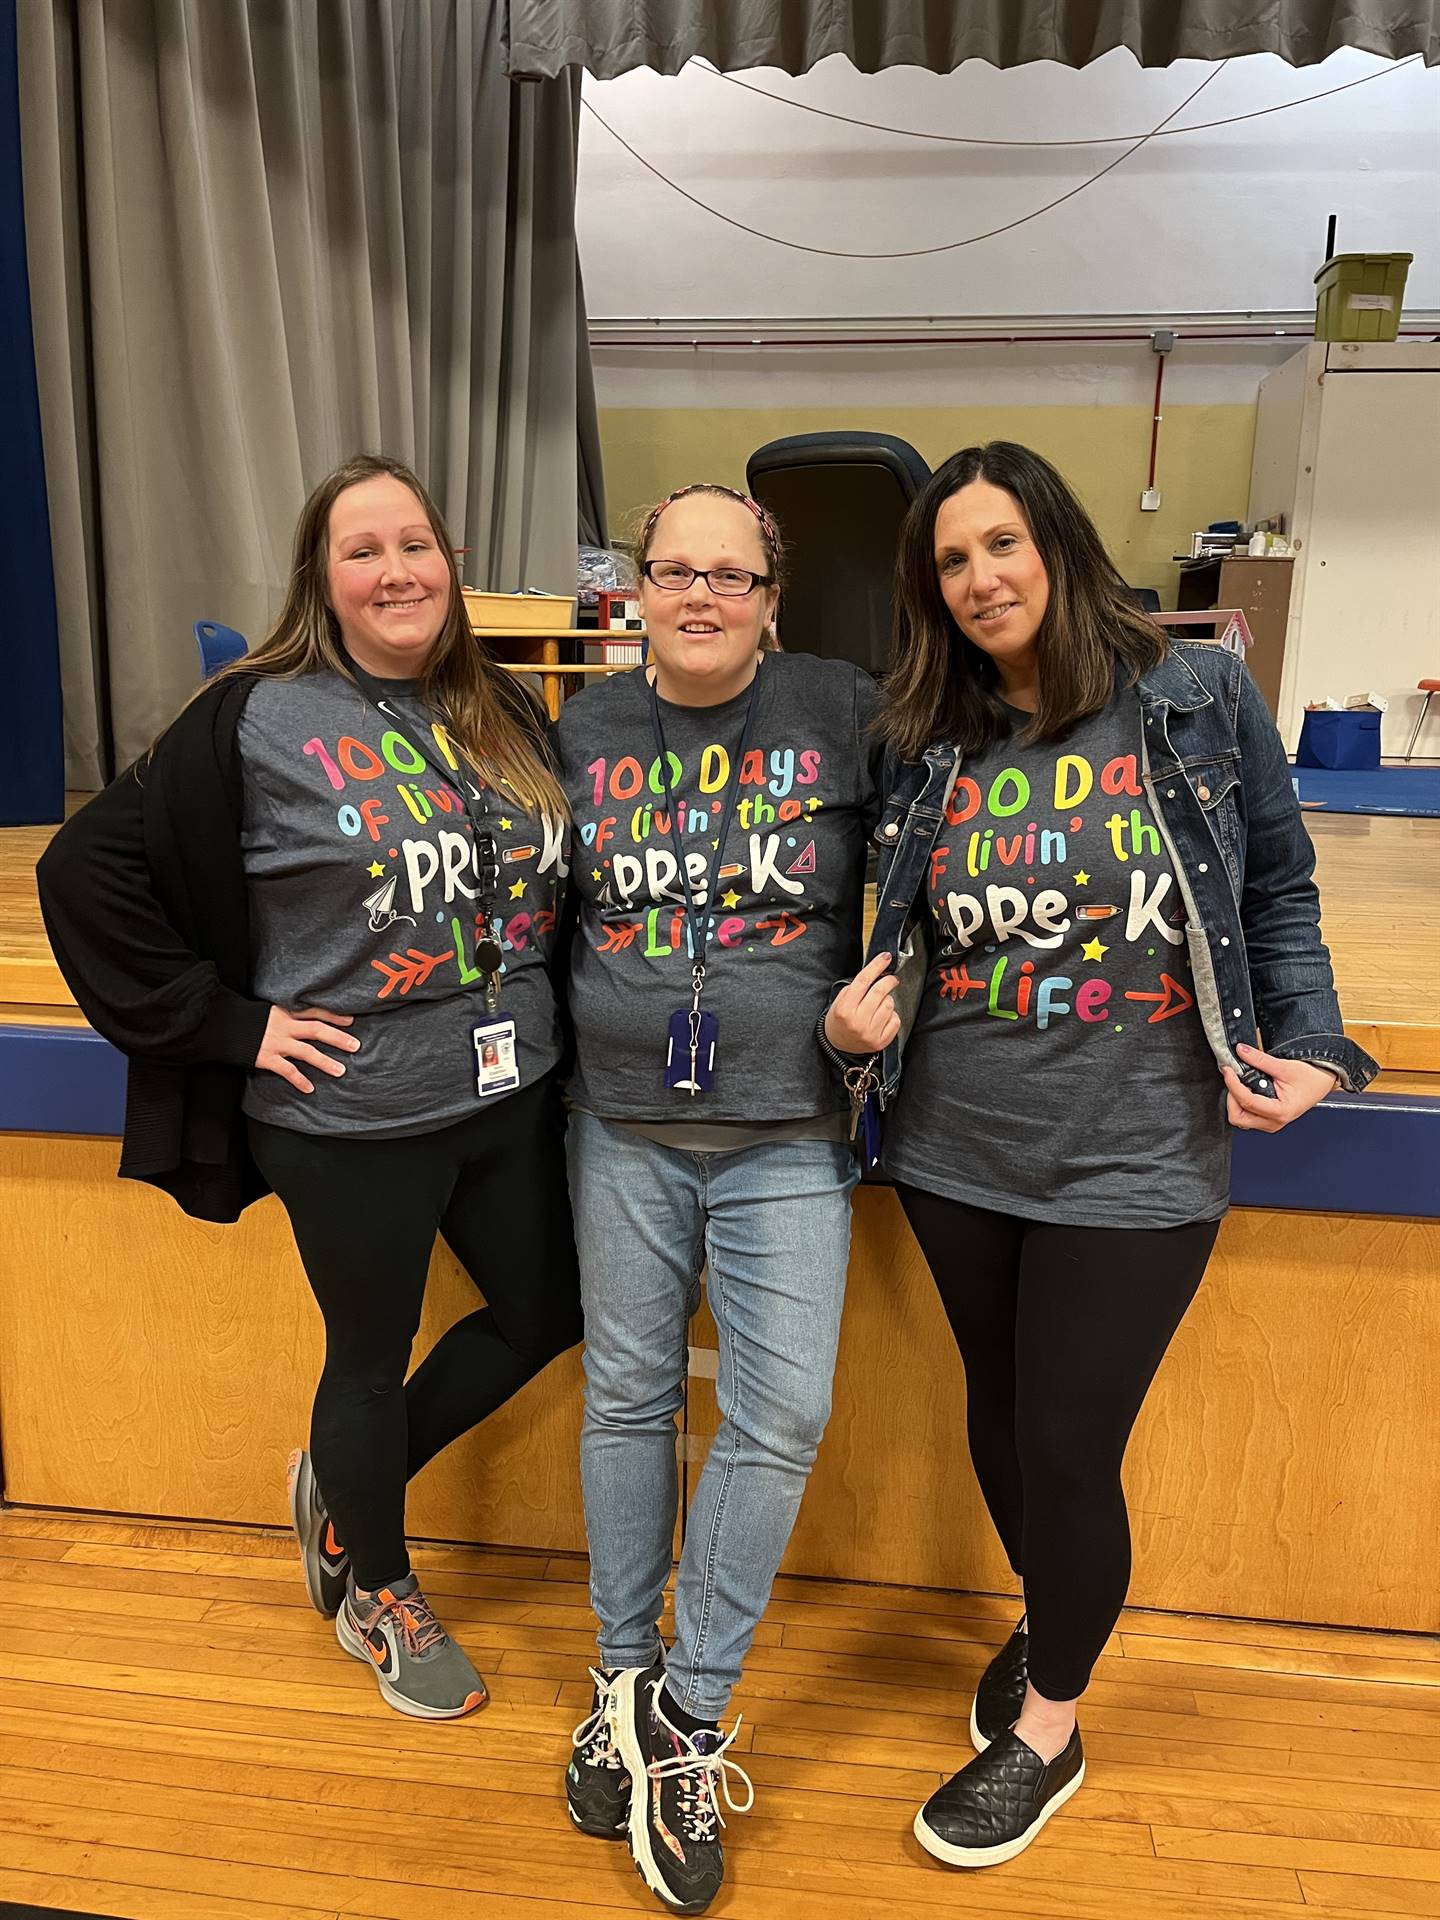 3 teachers dressed in same shirts